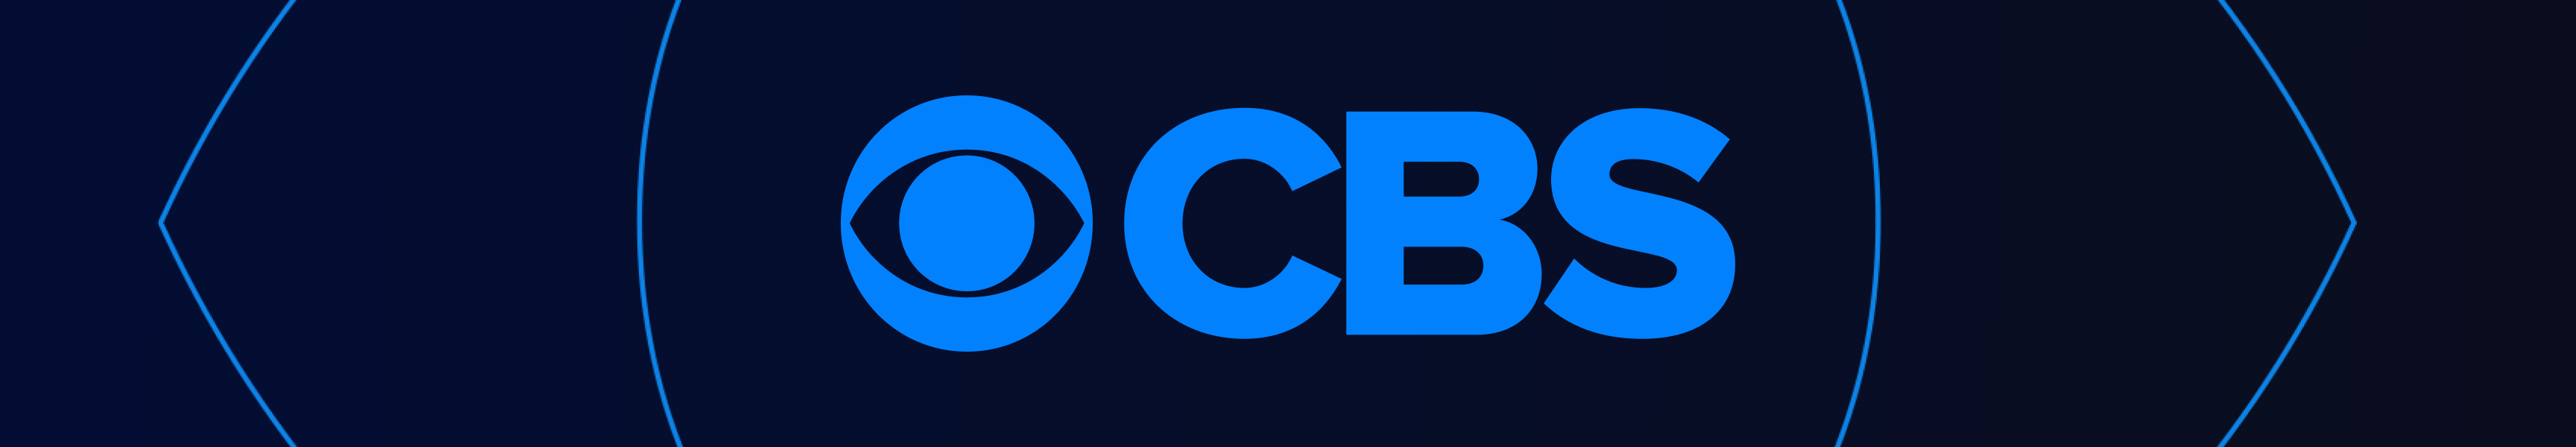 CBS Entertainment